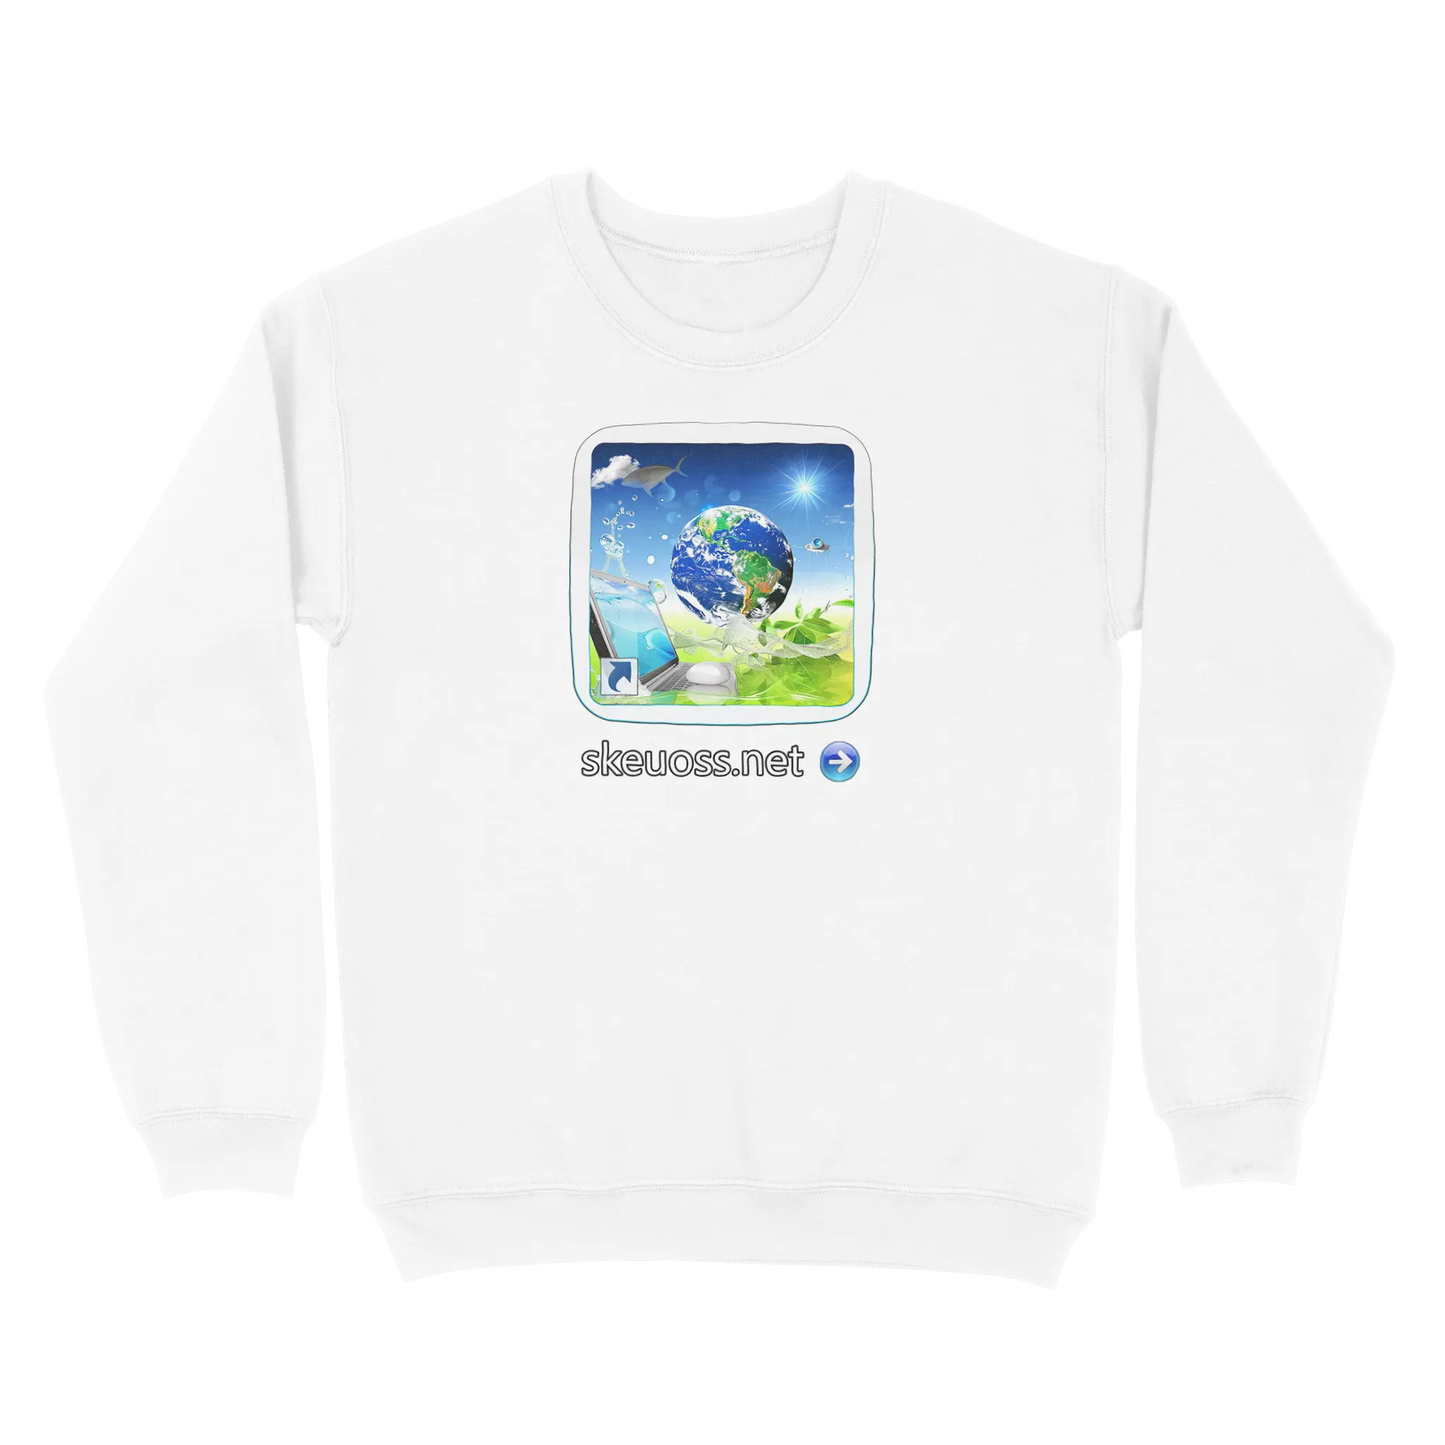 Frutiger Aero Sweatshirt - User Login Collection - User 361